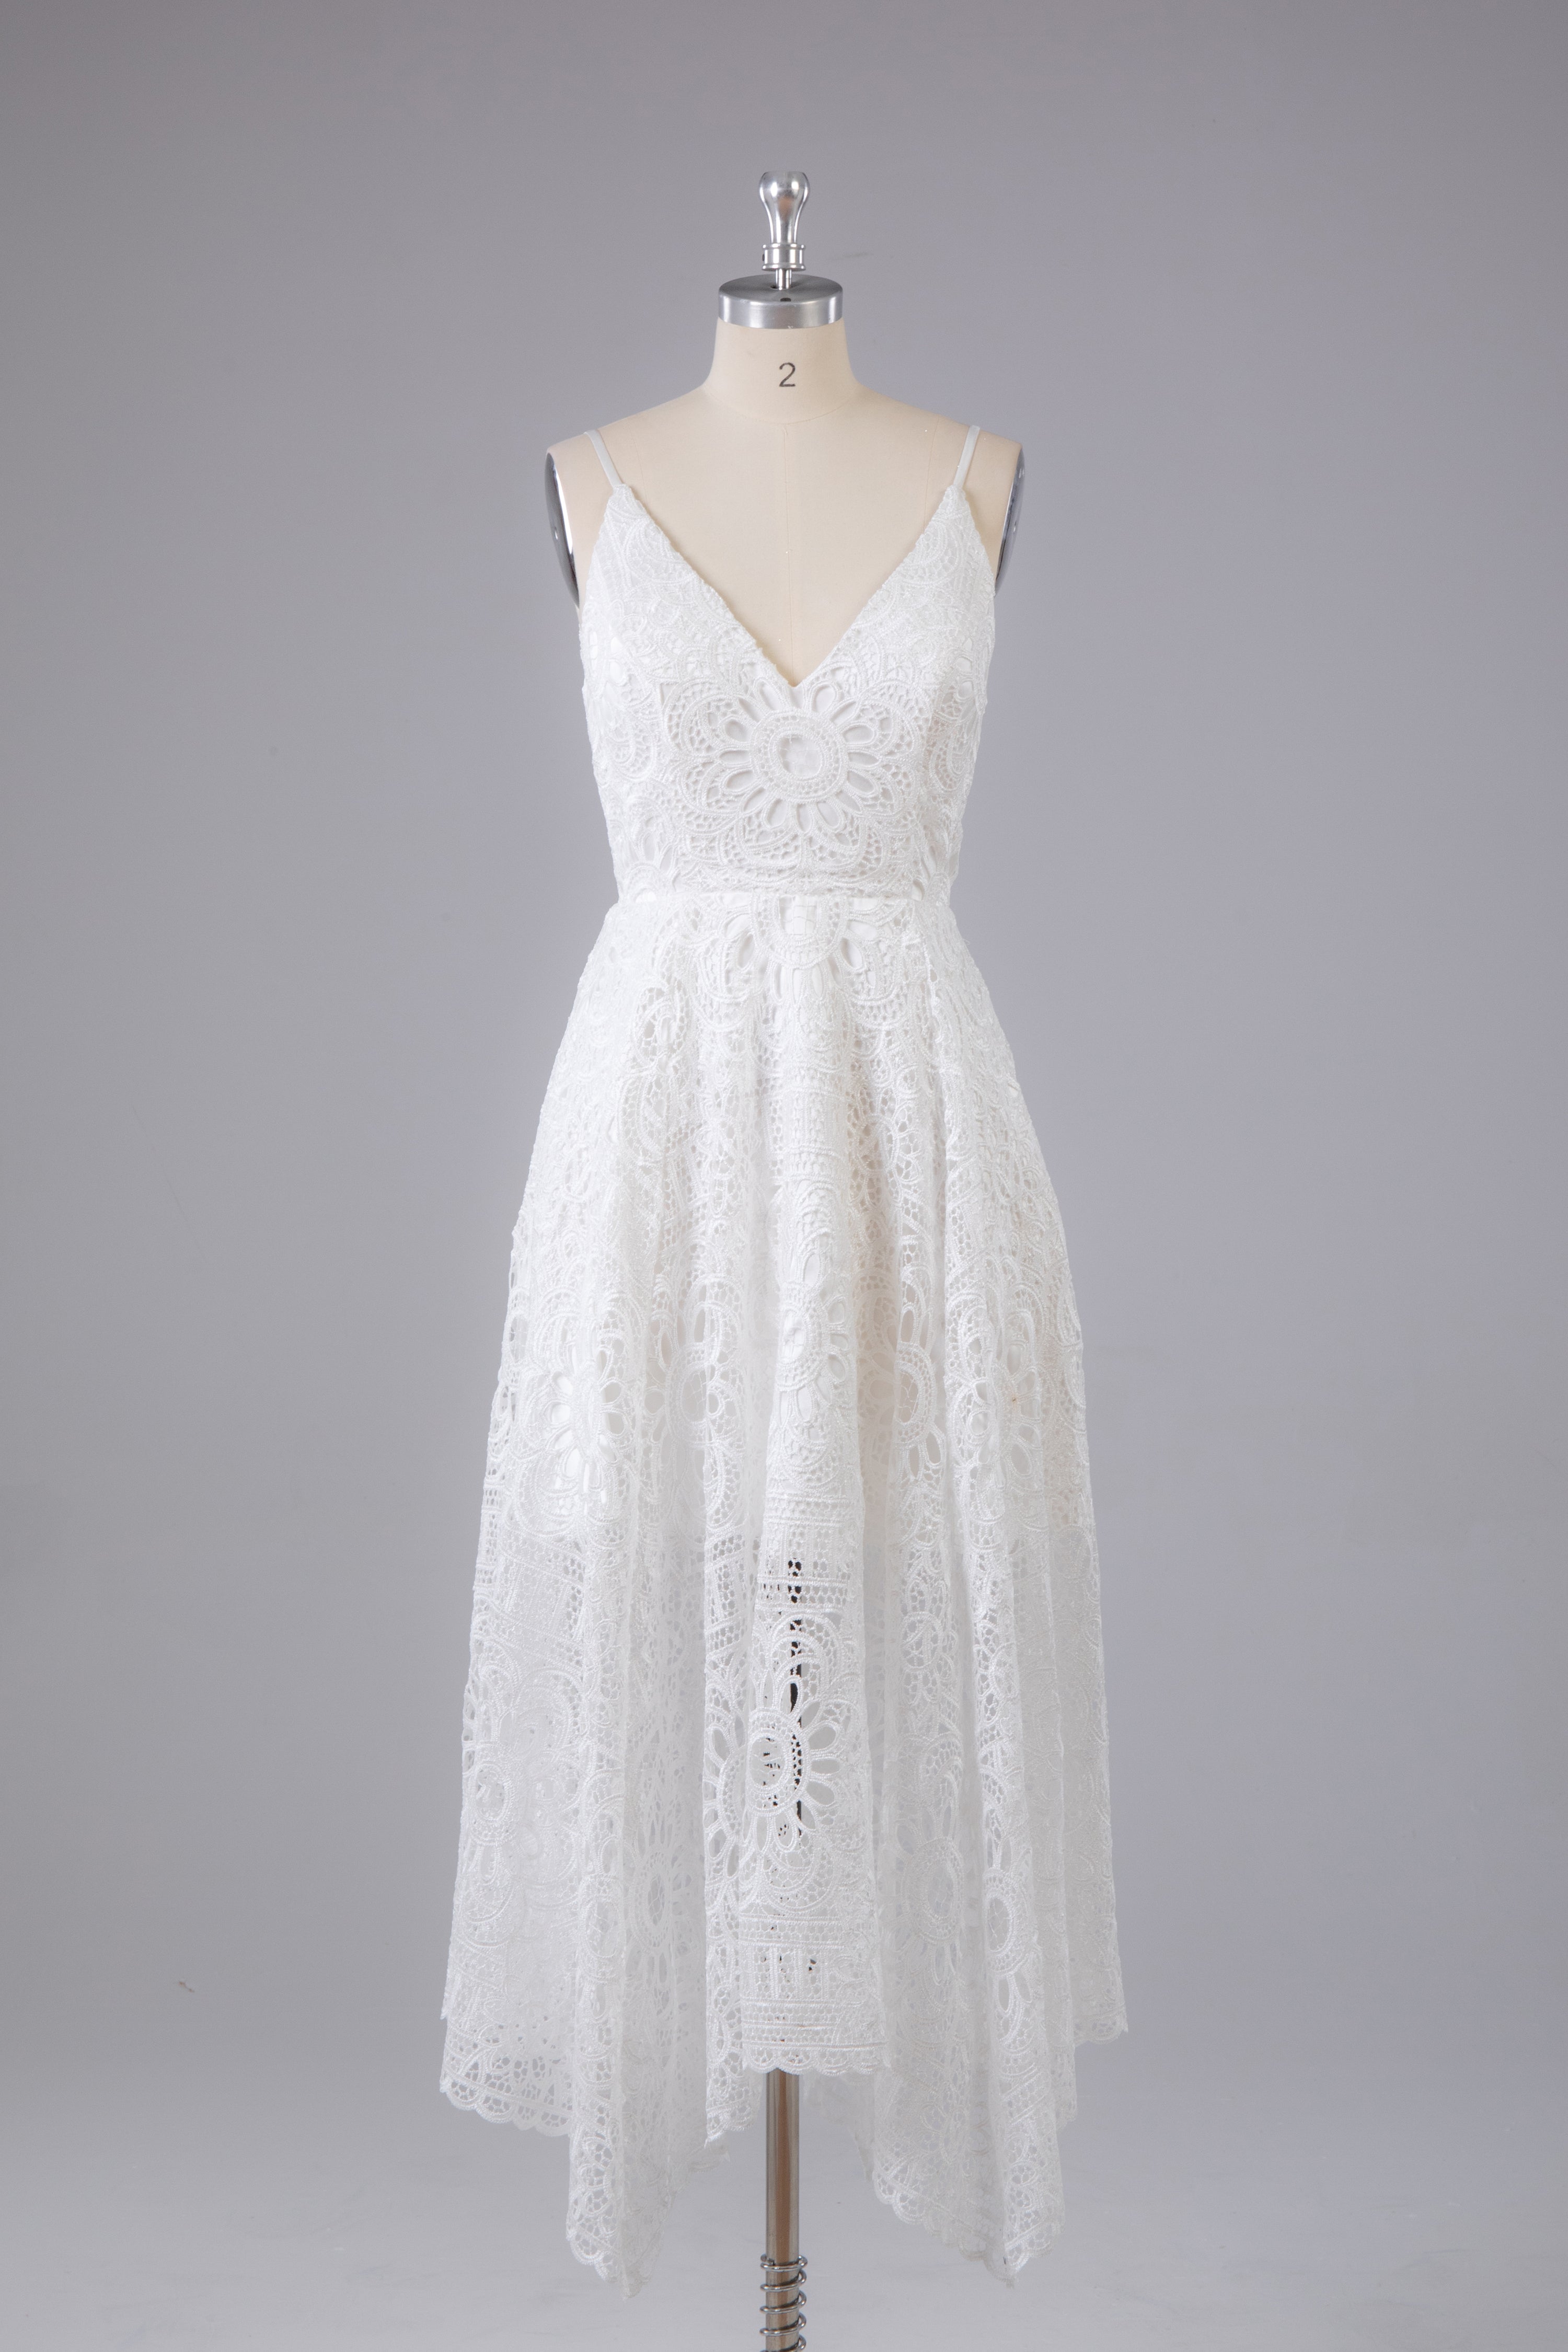 Party Dress Code Idea, Elegant Spaghetti Straps V Neck Lace Prom Dress